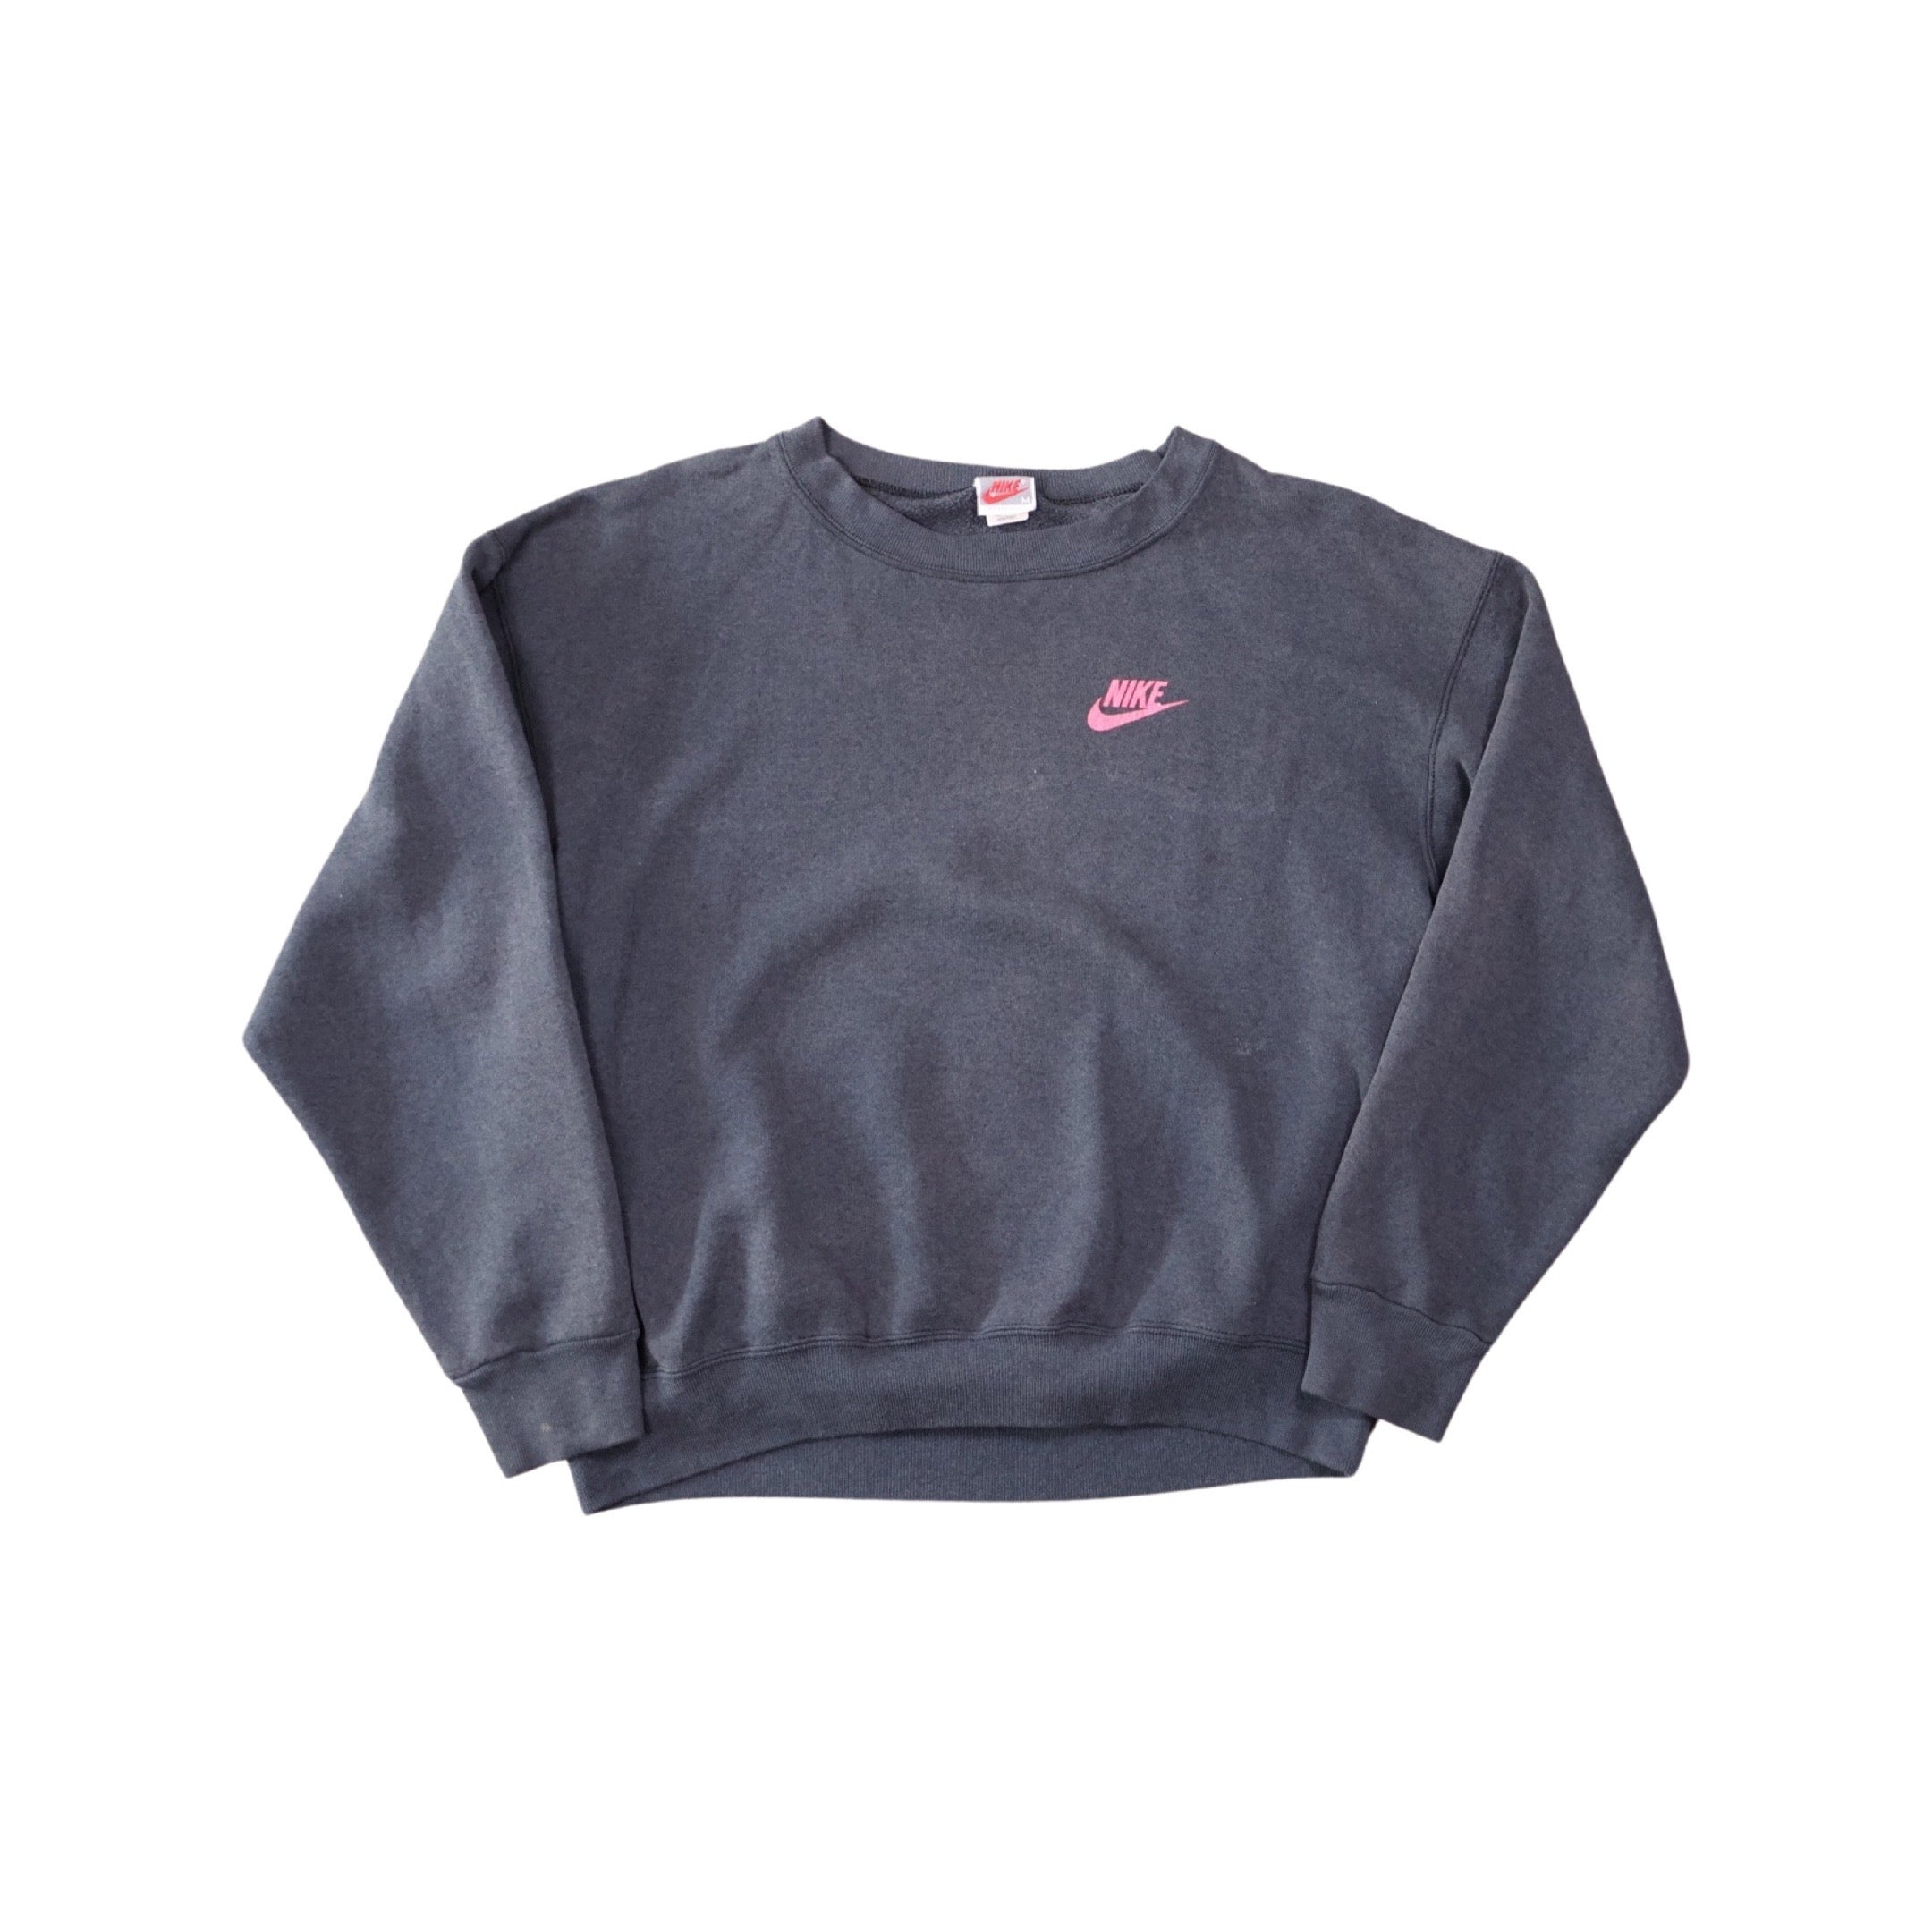 Gray Nike 80s/90s Sweater (Small)